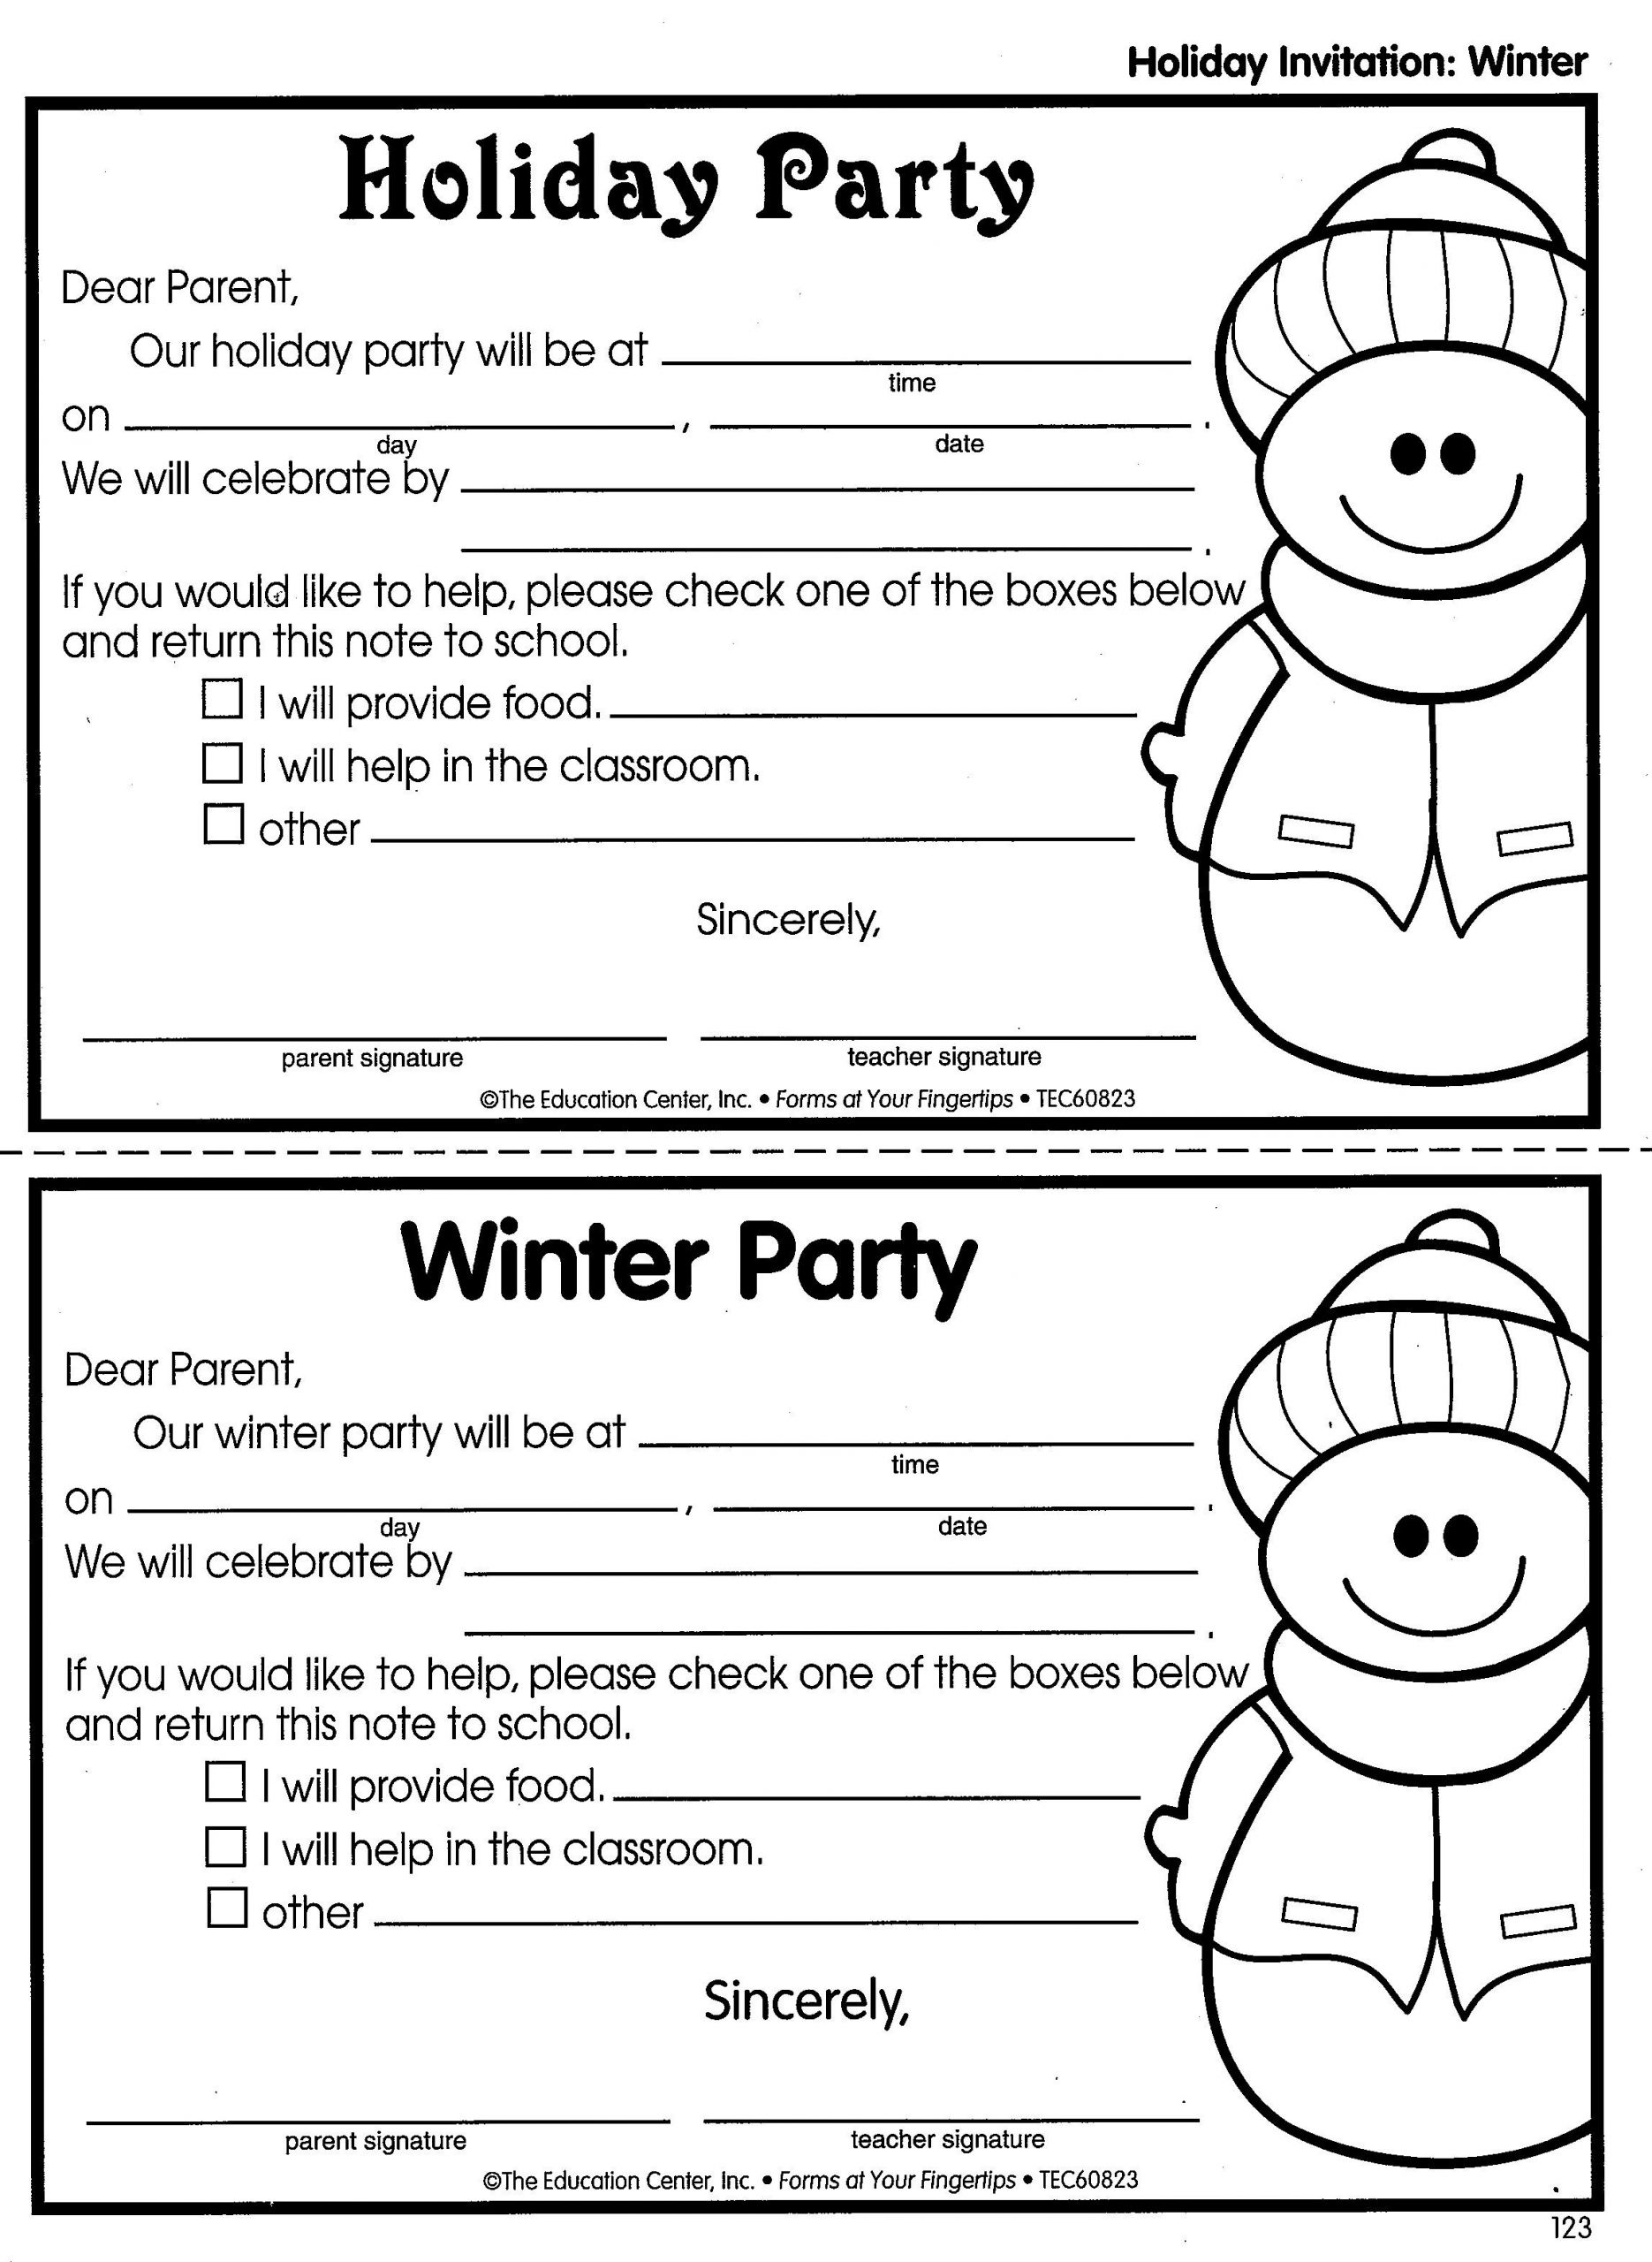 Classroom Holiday Party Ideas
 Holiday Party Winter Party classroom invitations